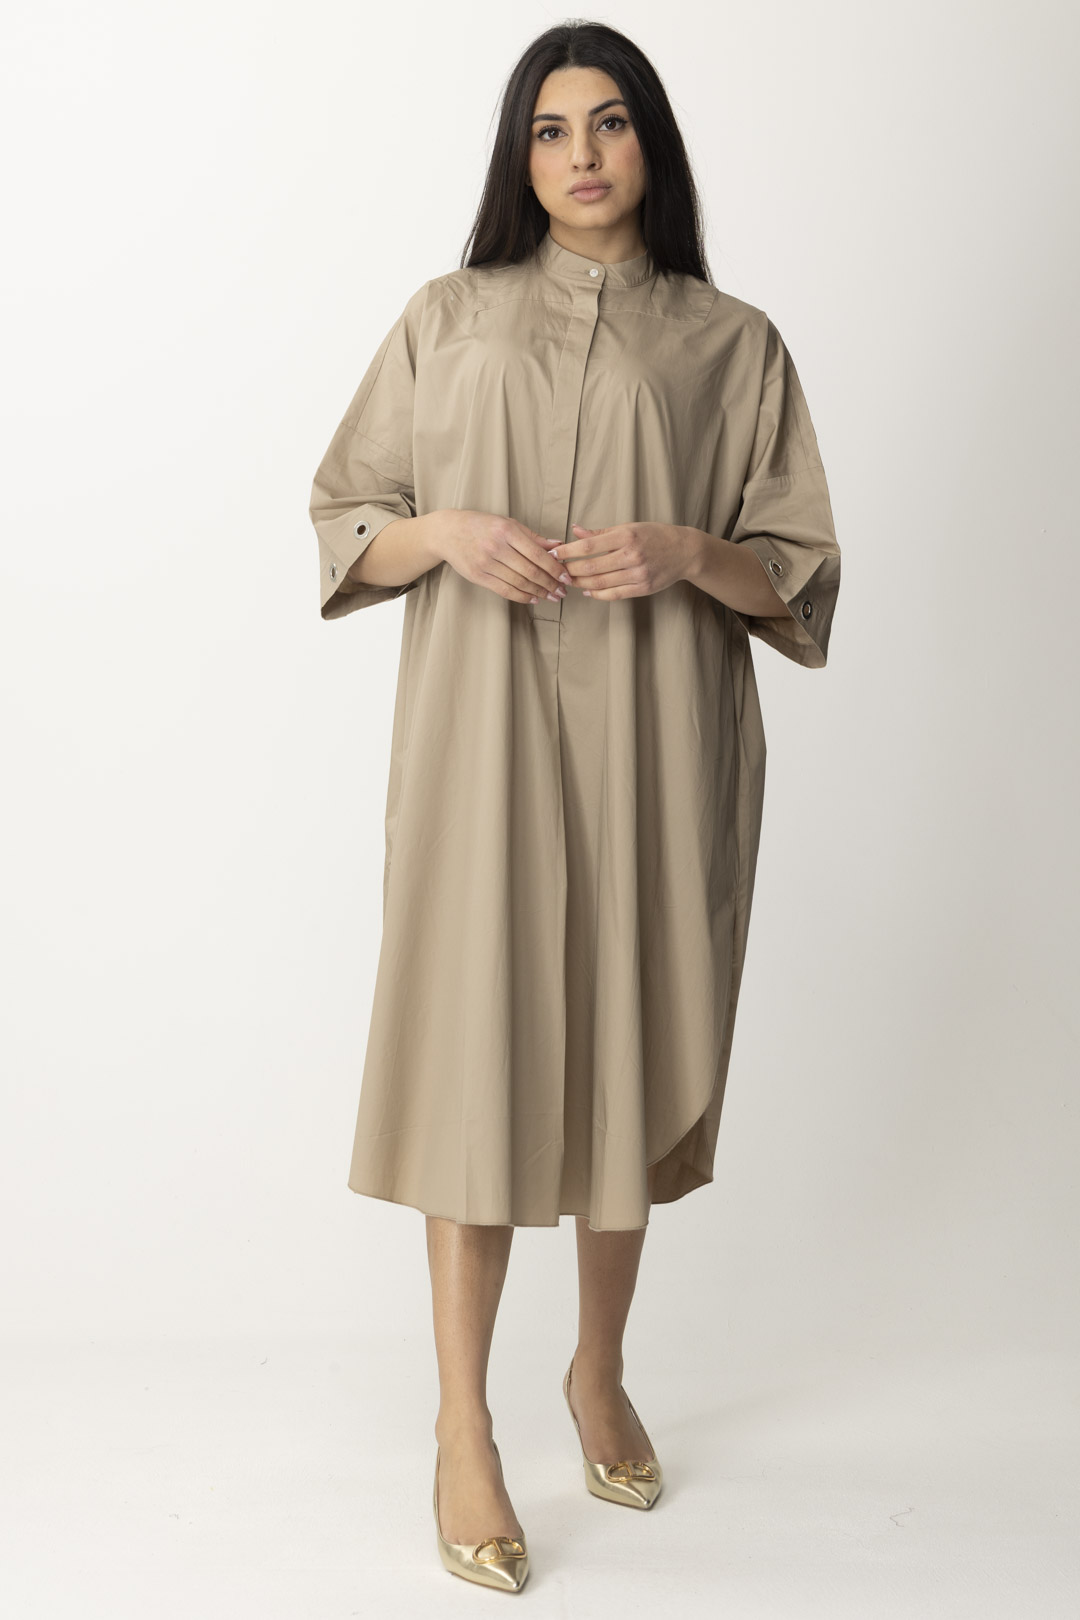 Podgląd: Replay Sukienka koszulowa oversize SAHARA